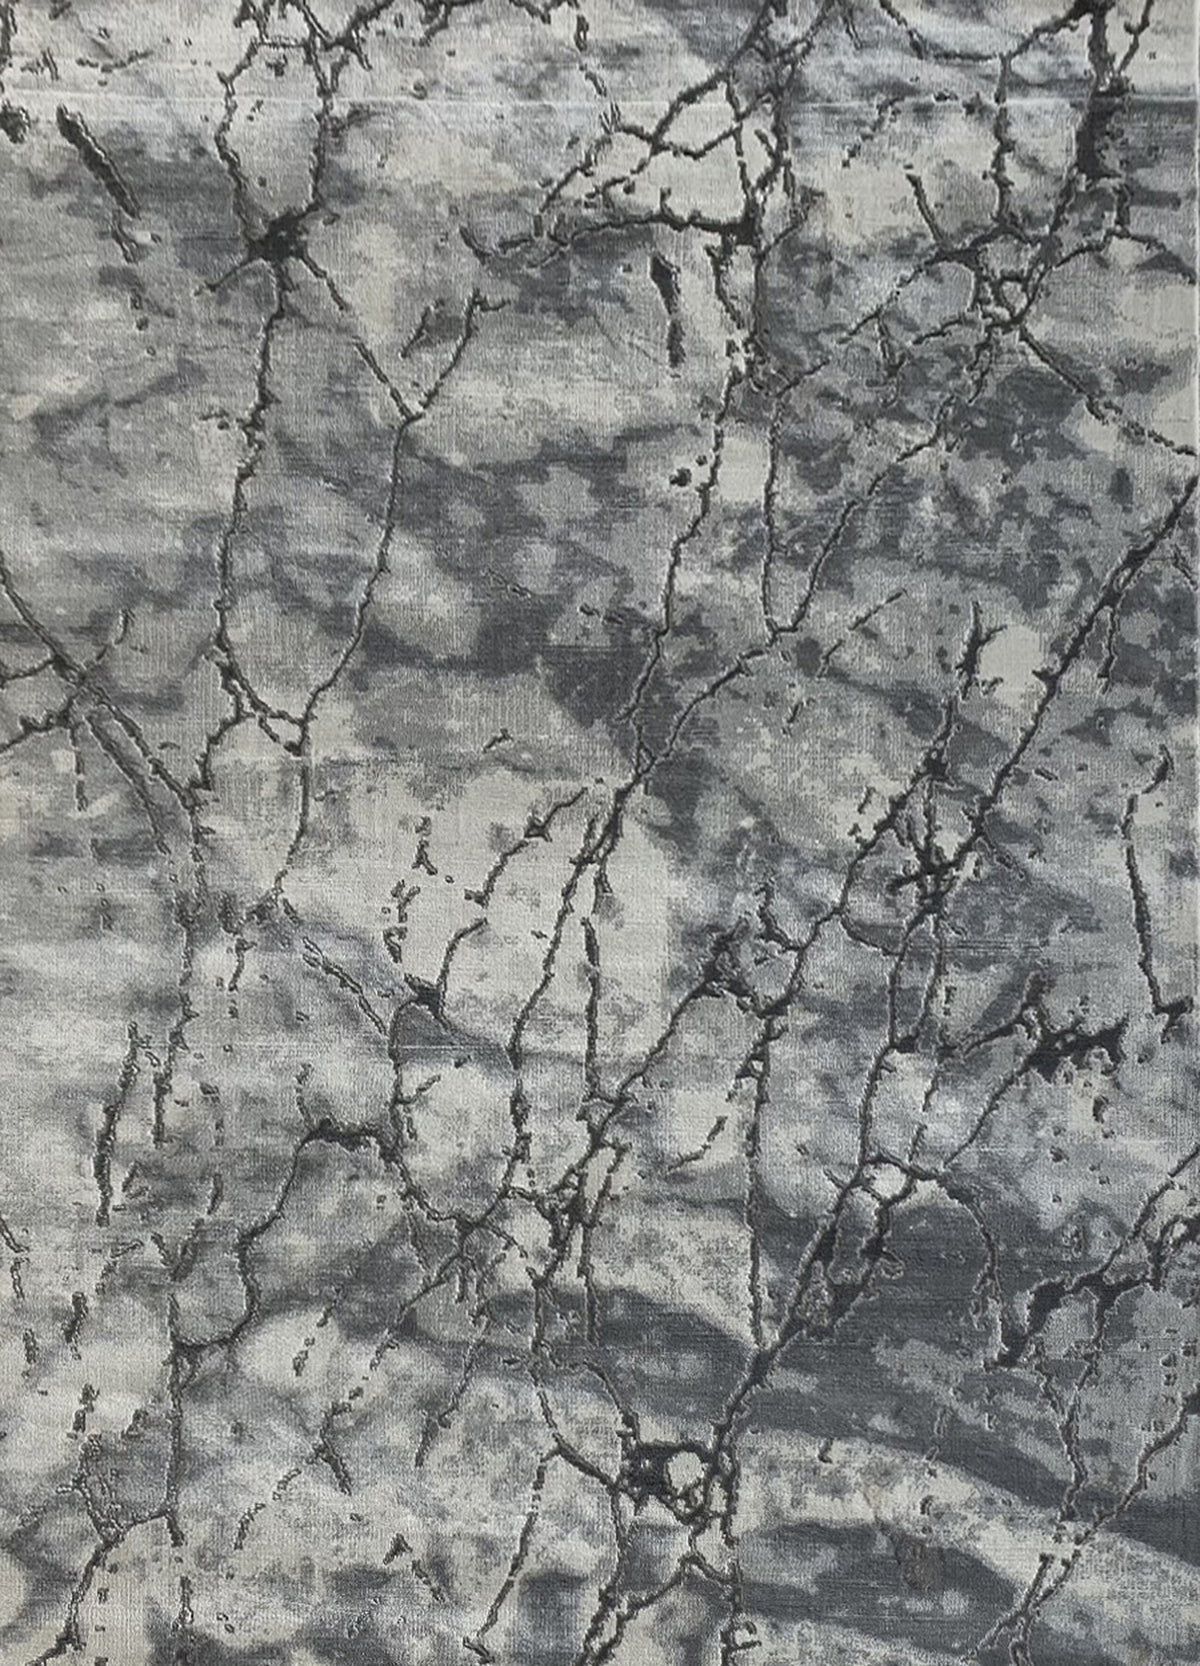 Rugslane Vegas Grey Silver Abstract Superior Carpet 5.3 ft x 7.7 ft